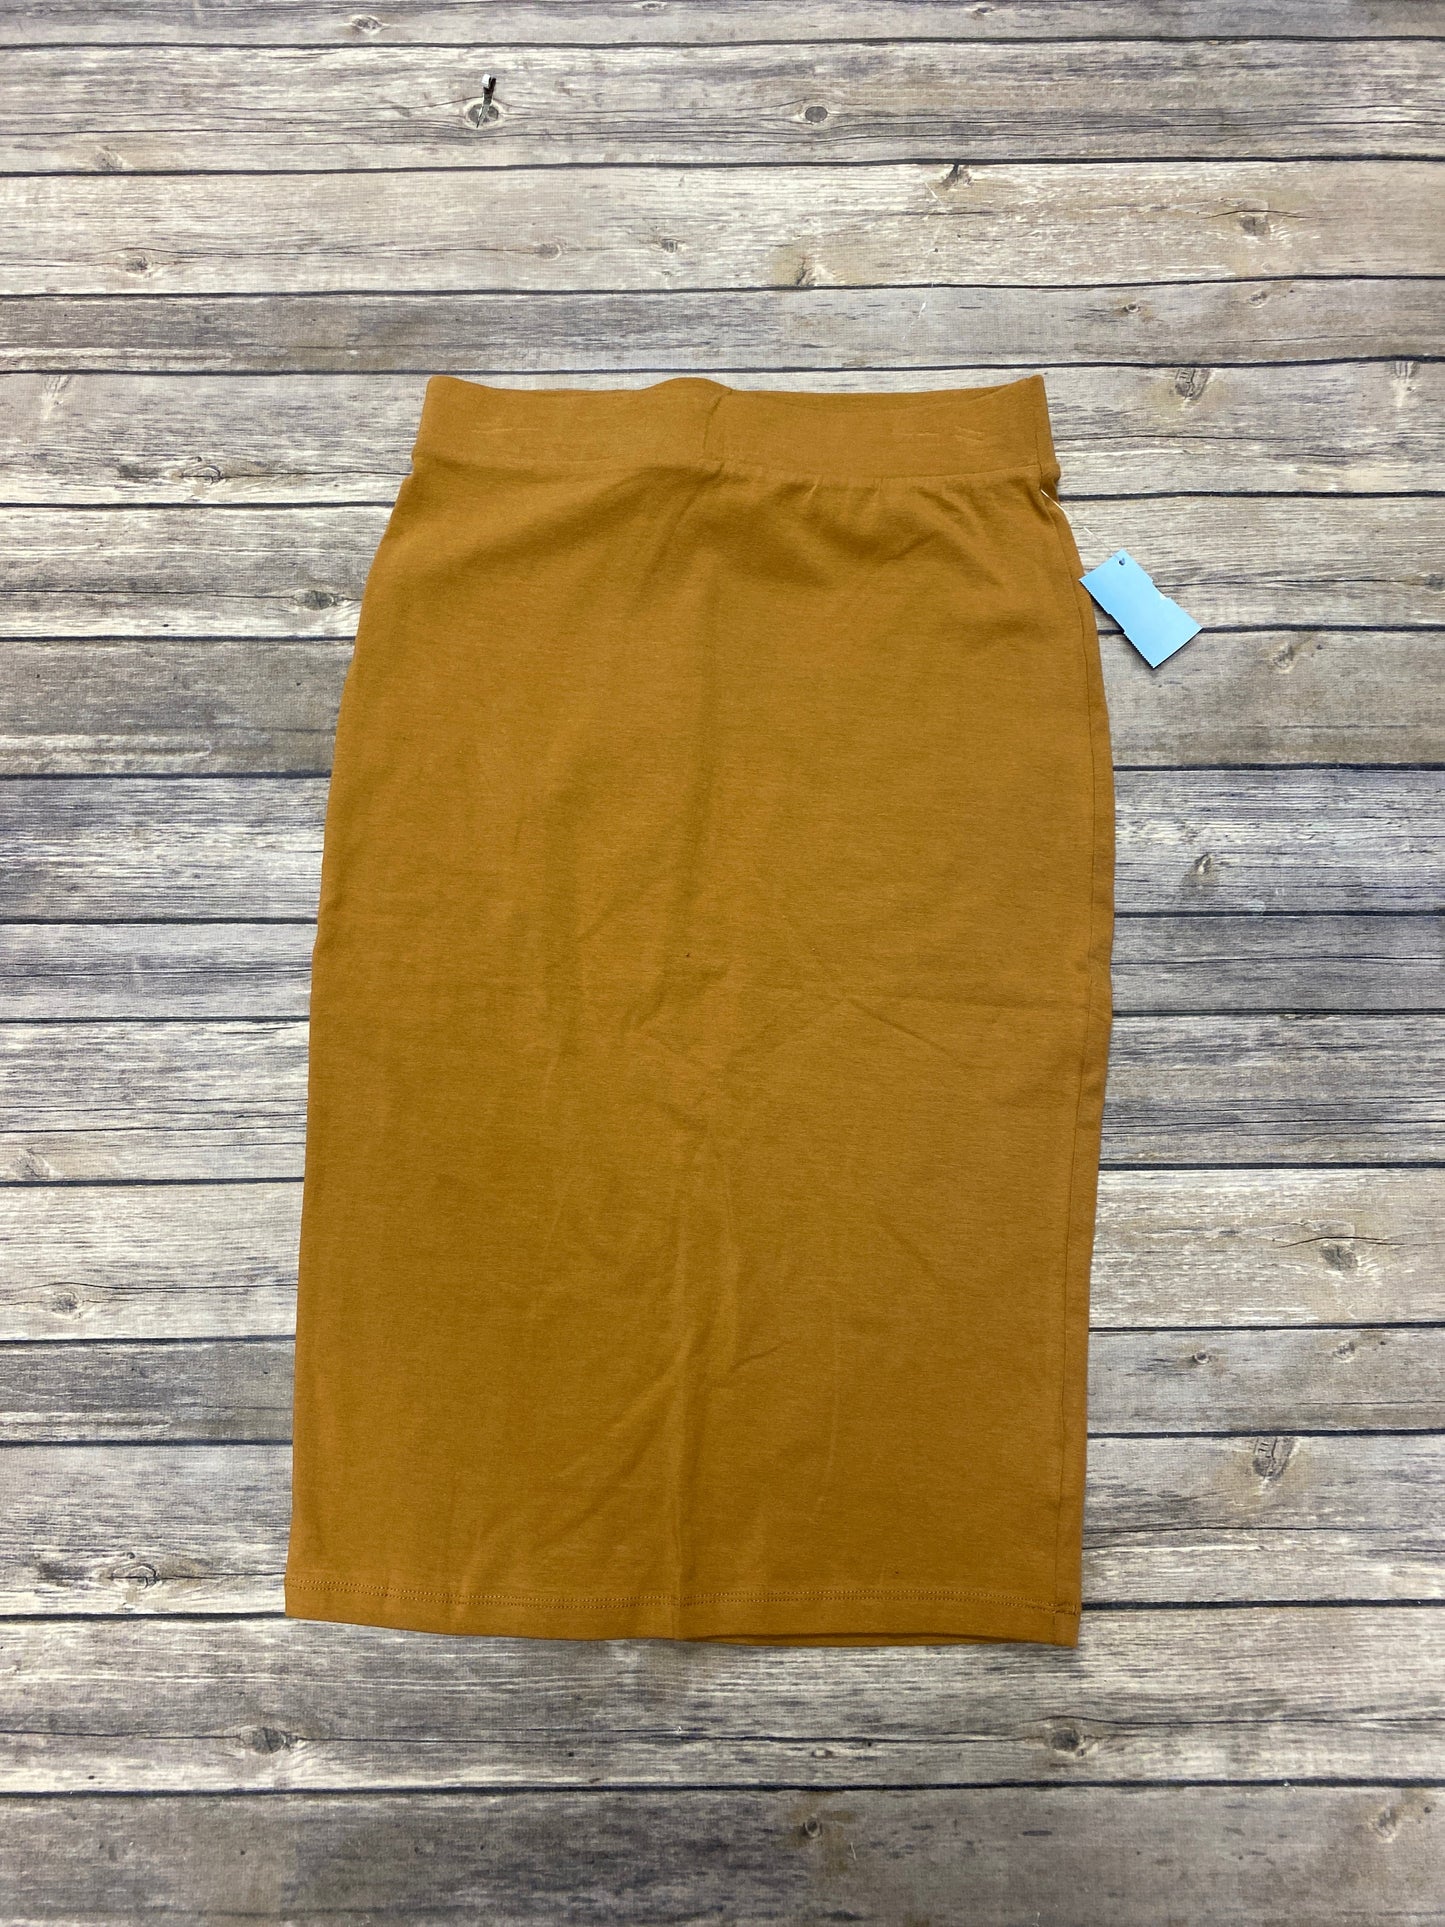 Skirt Midi By Zenana Outfitters  Size: M